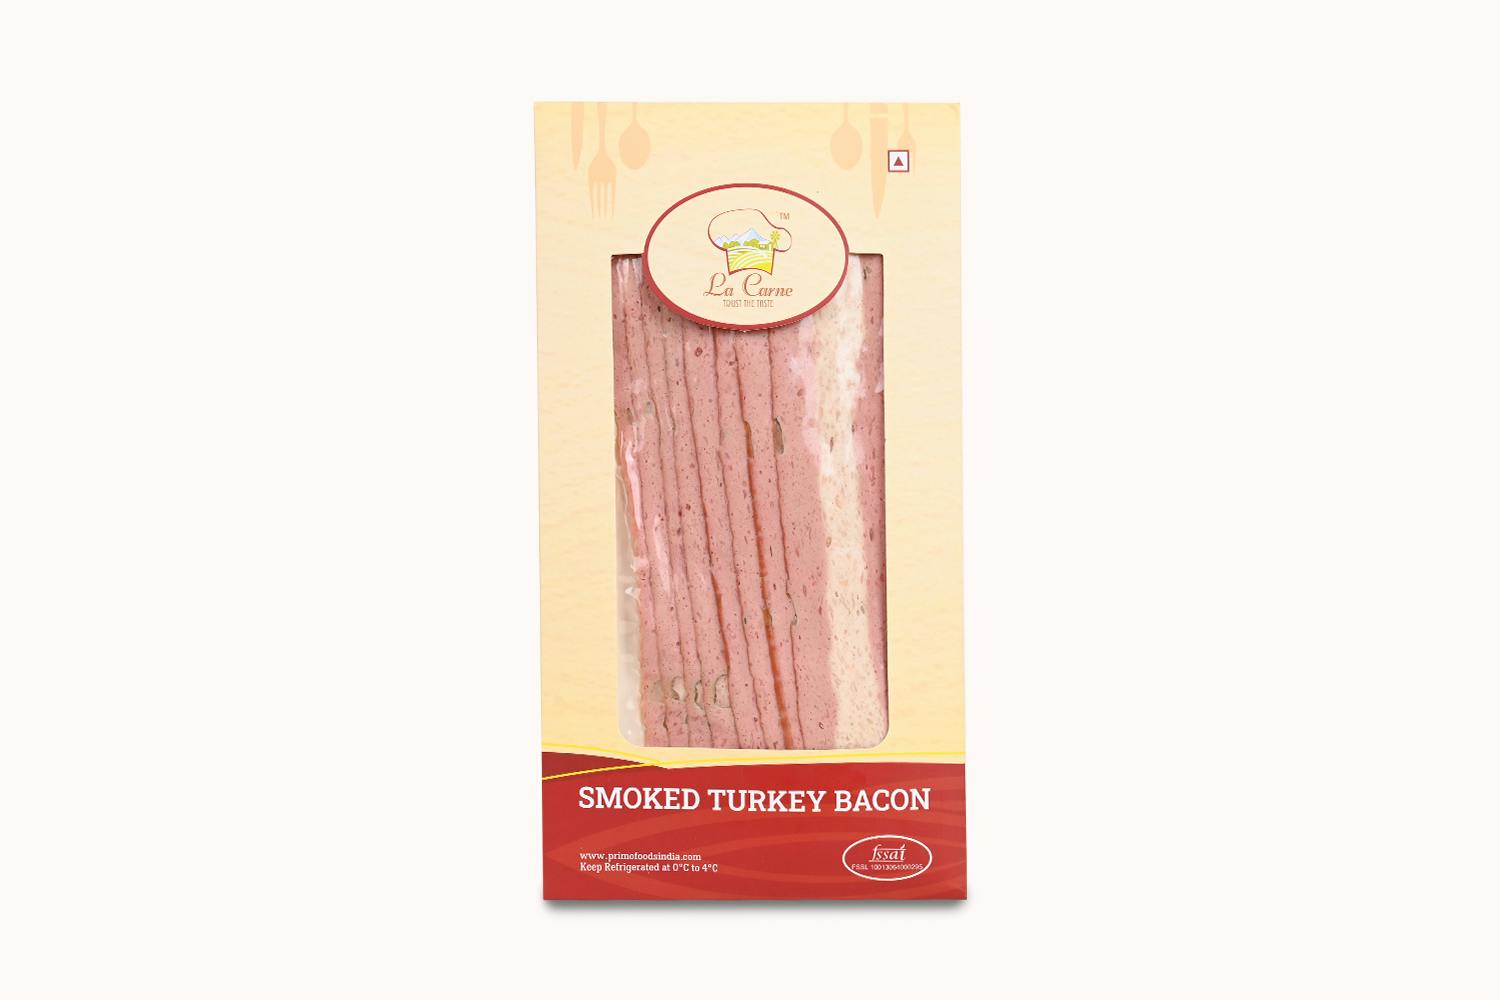 La Carne Turkey Bacon